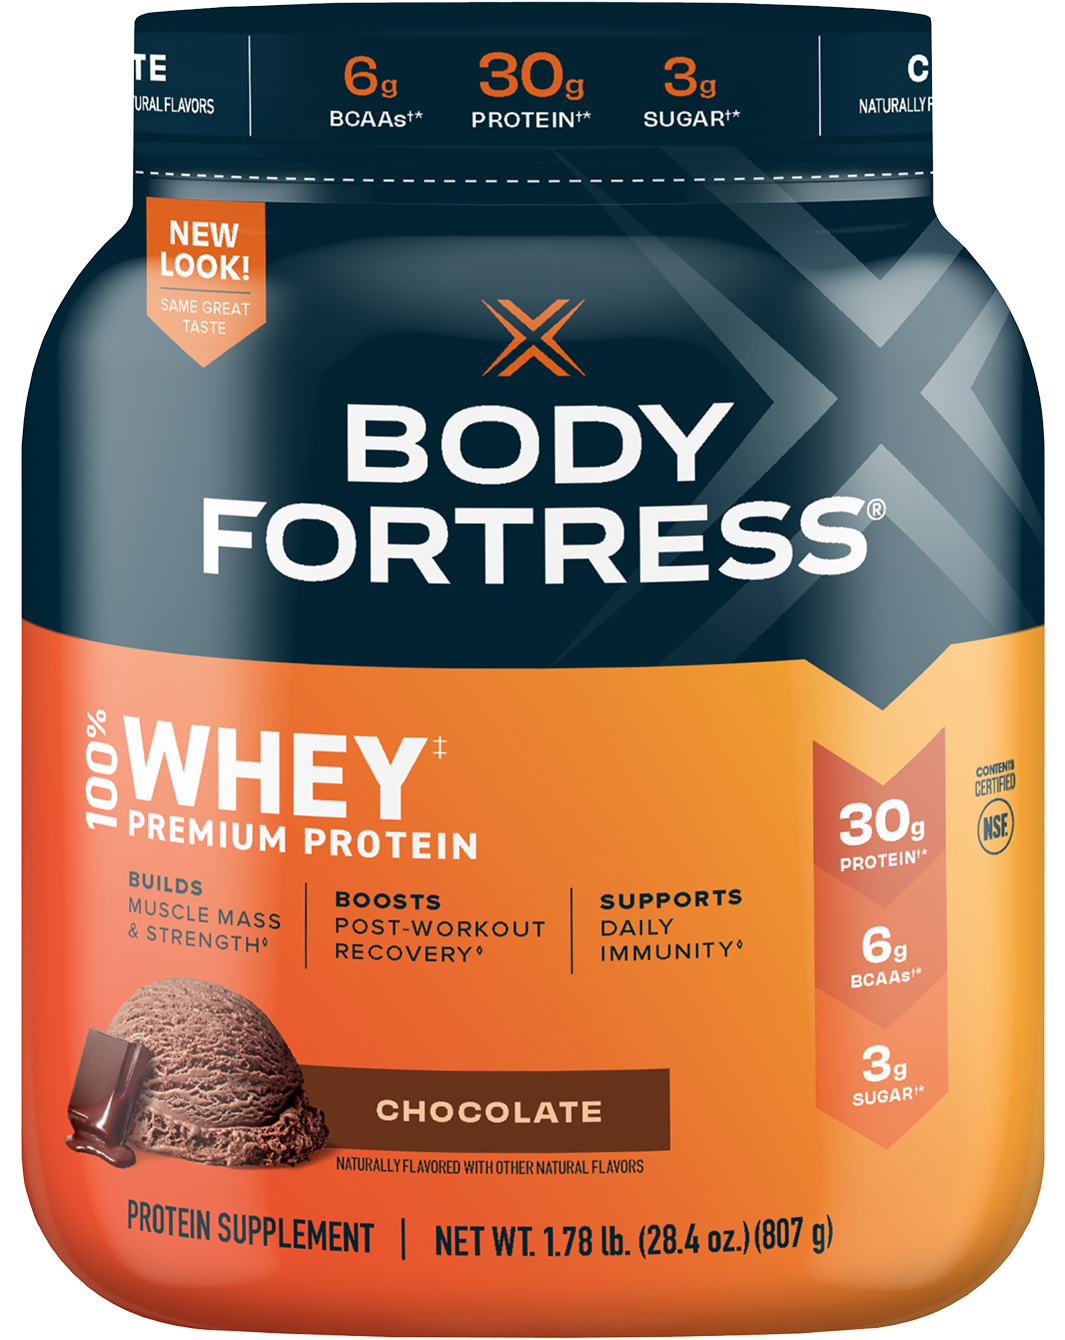 100% Whey, Premium Protein Powder, Chocolate